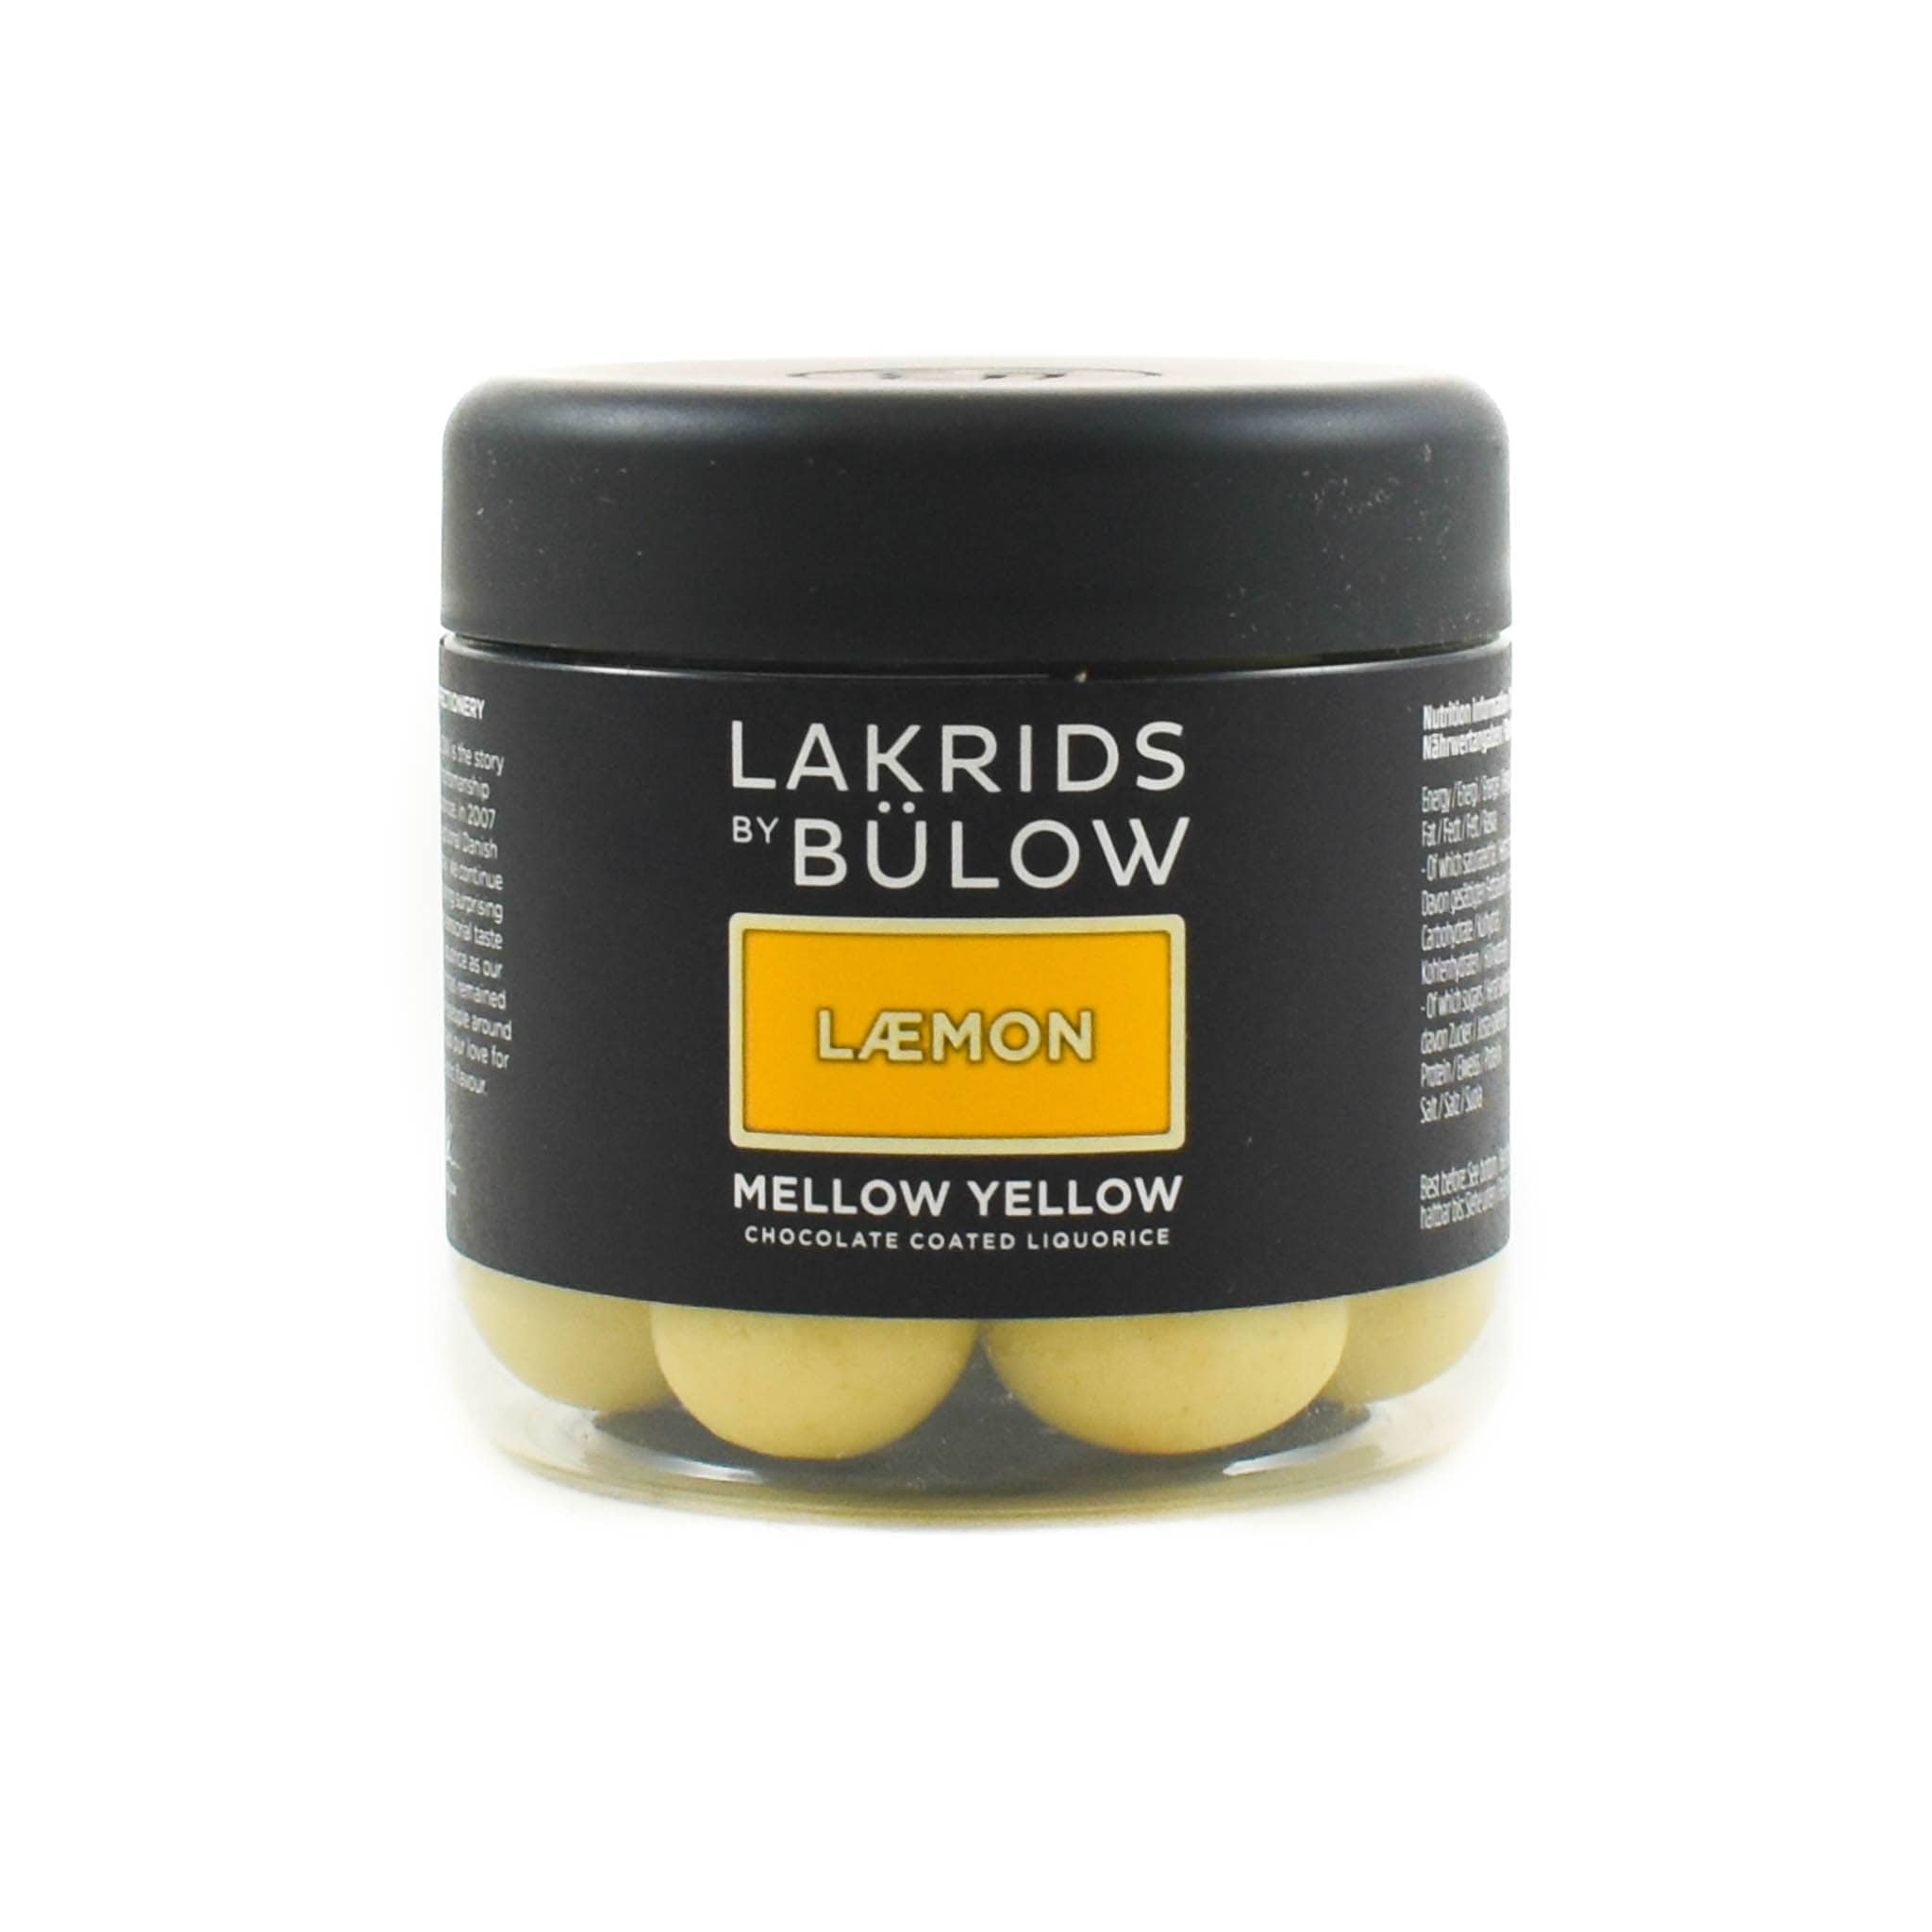 Lakrids Summer Lemon Liquorice, 125g